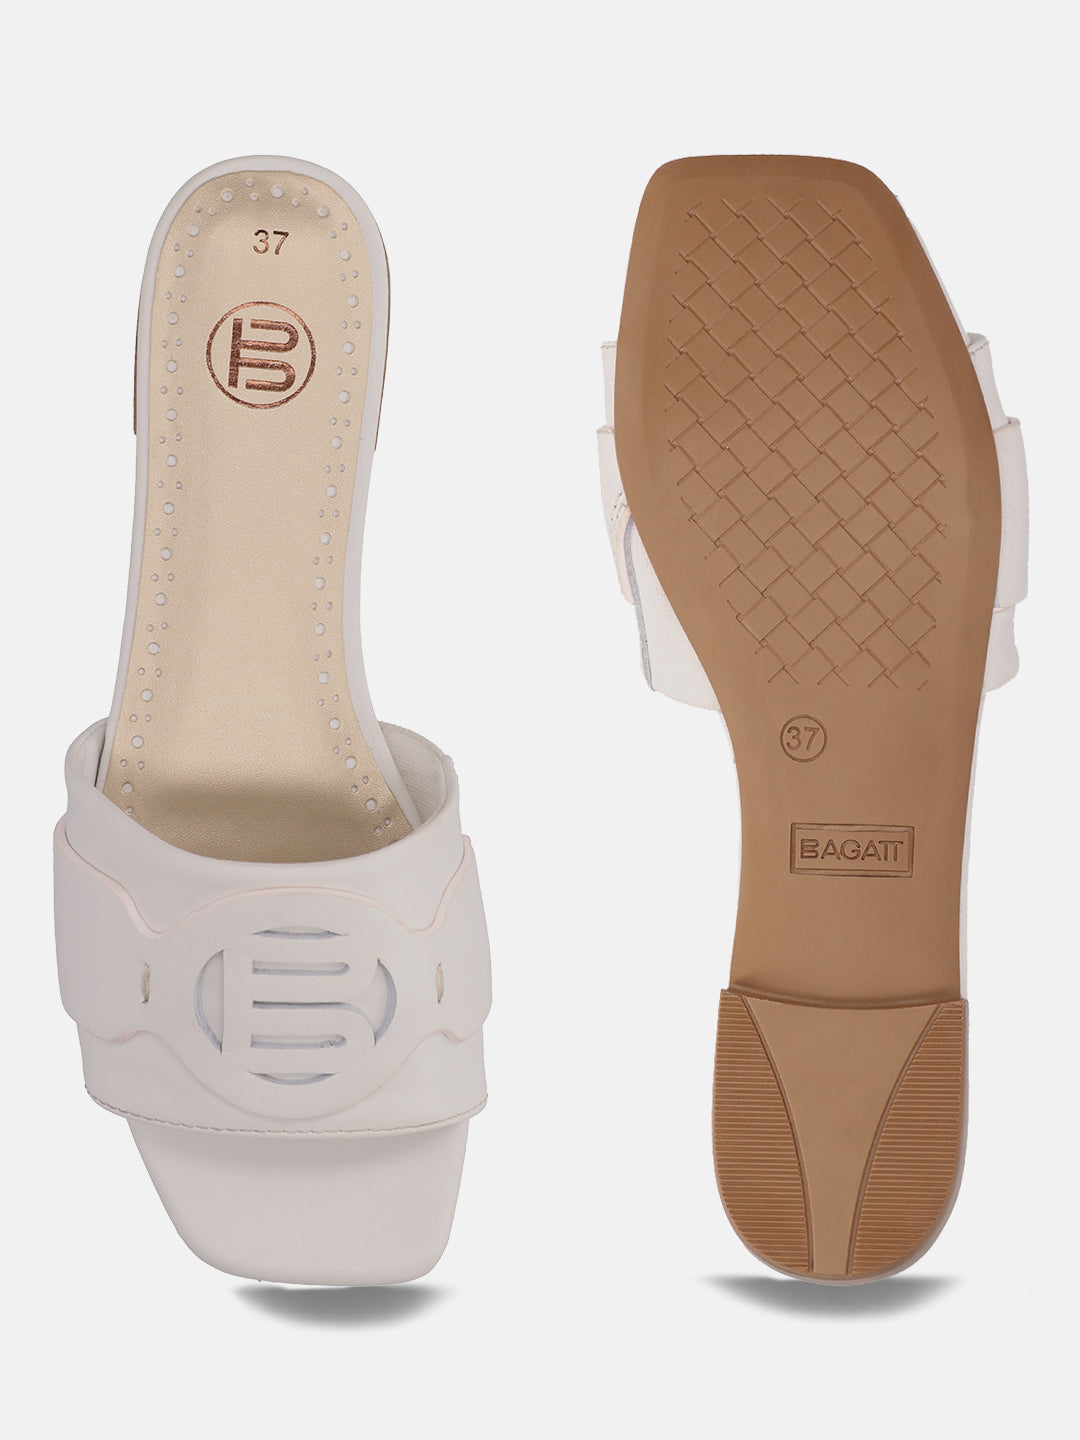 Mala White Leather Sandals